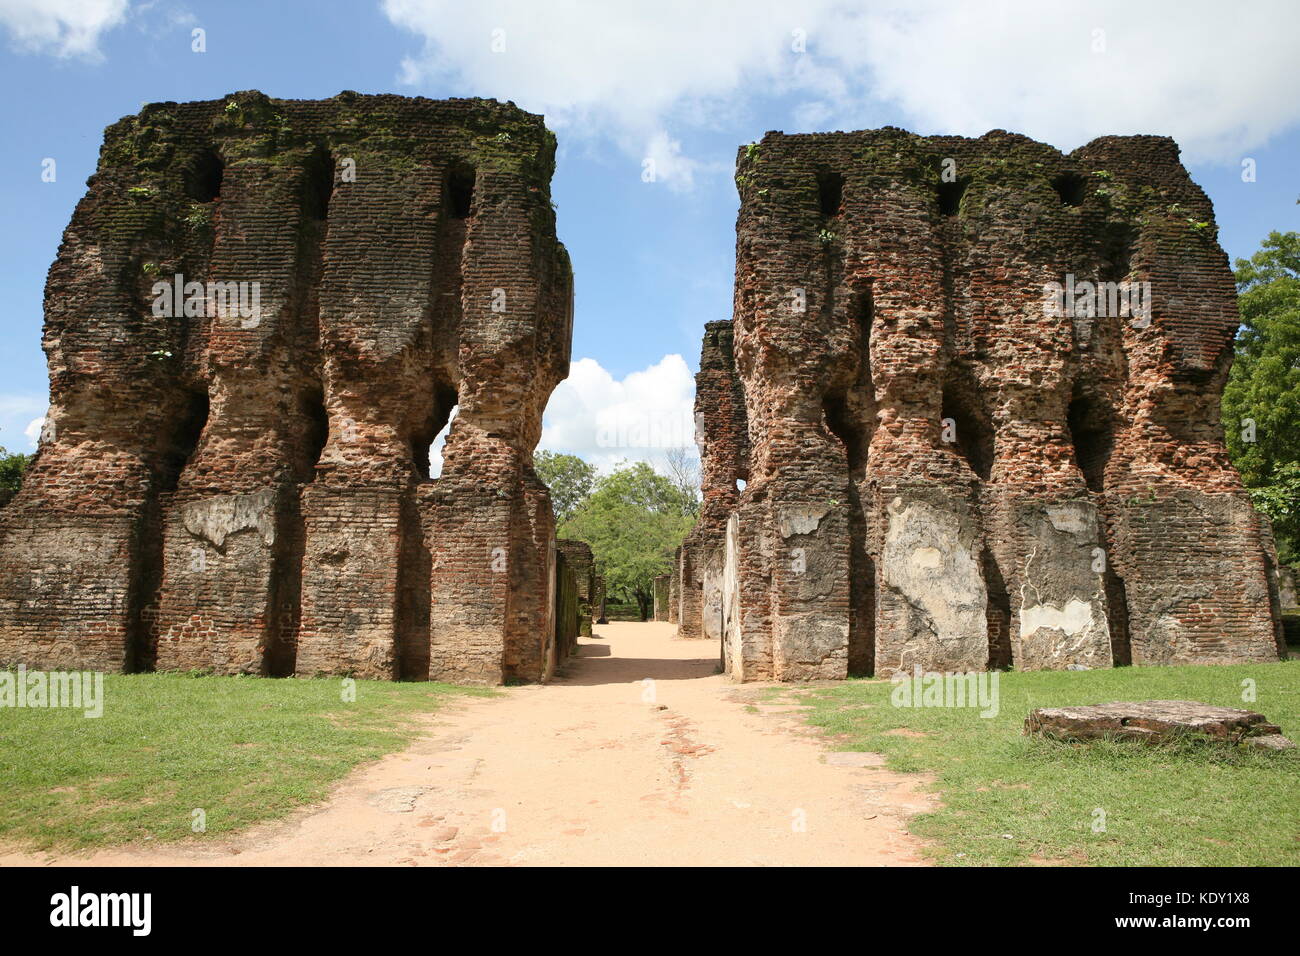 Royal palace of King Parakramabahu in Polonnaruwa - Sri Lanka Stock Photo